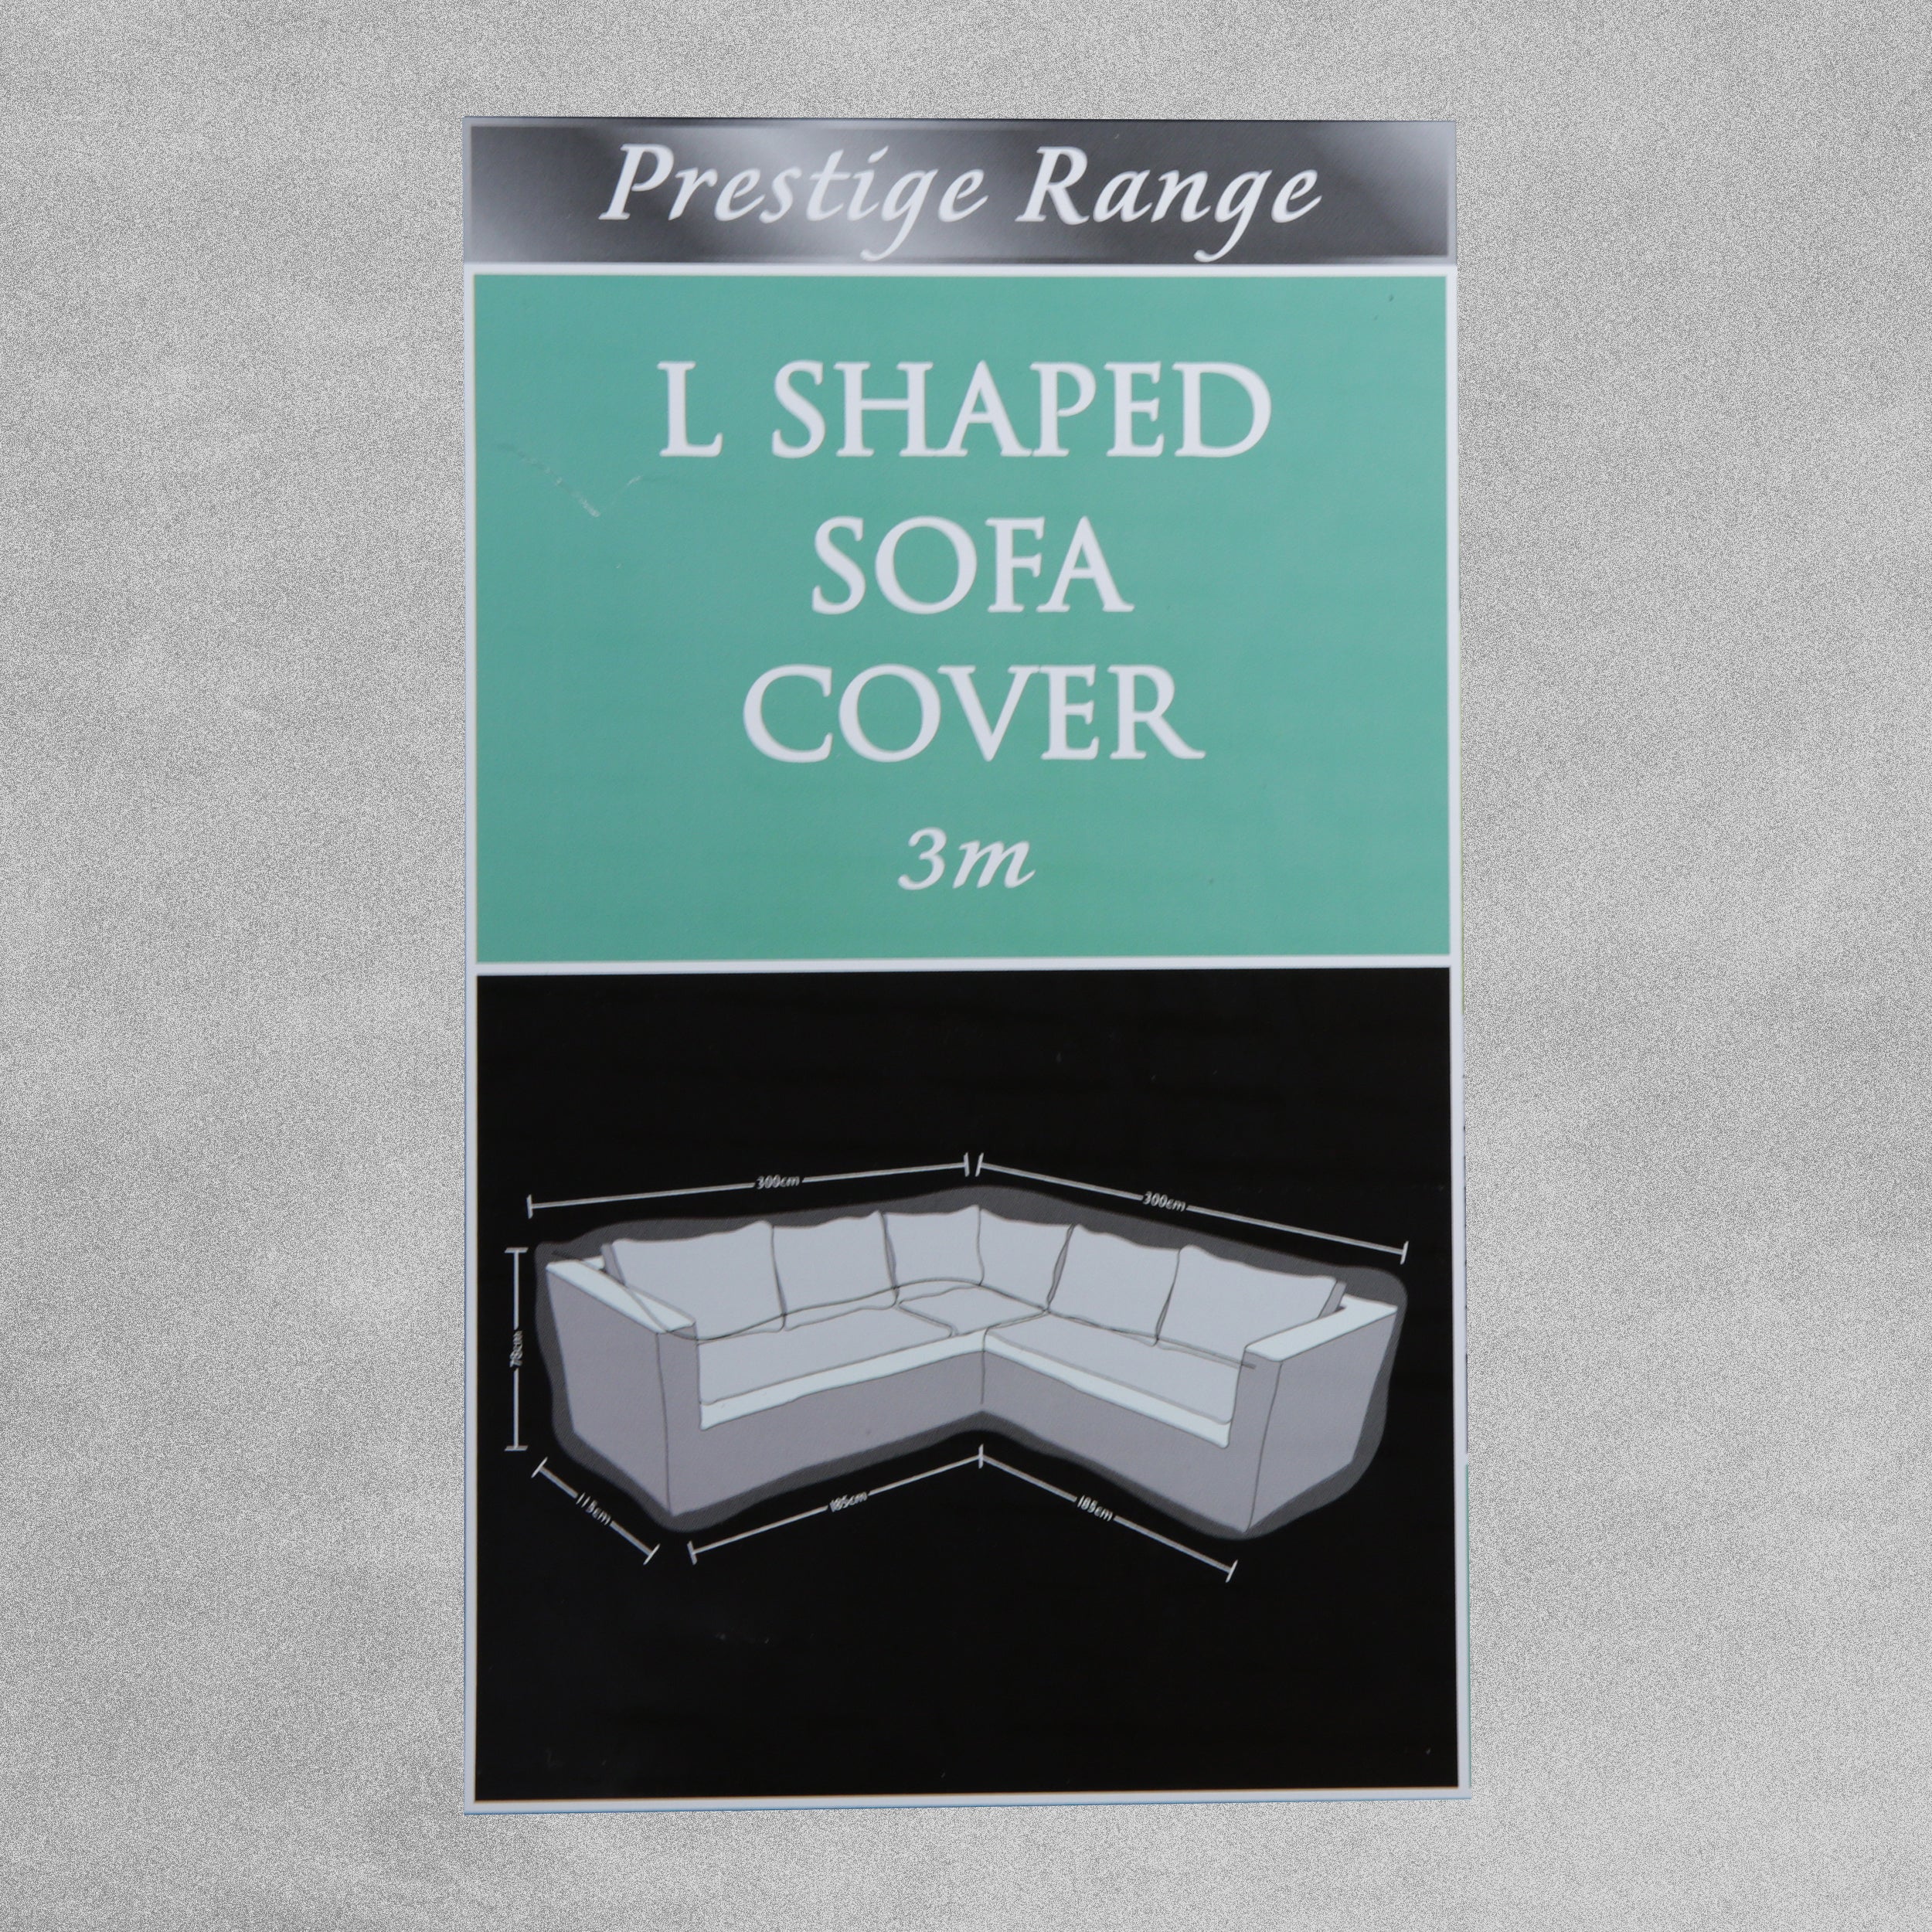 Tom Chambers Prestige Range Garden Covers - L Shaped Sofa Cover 3m - Grey